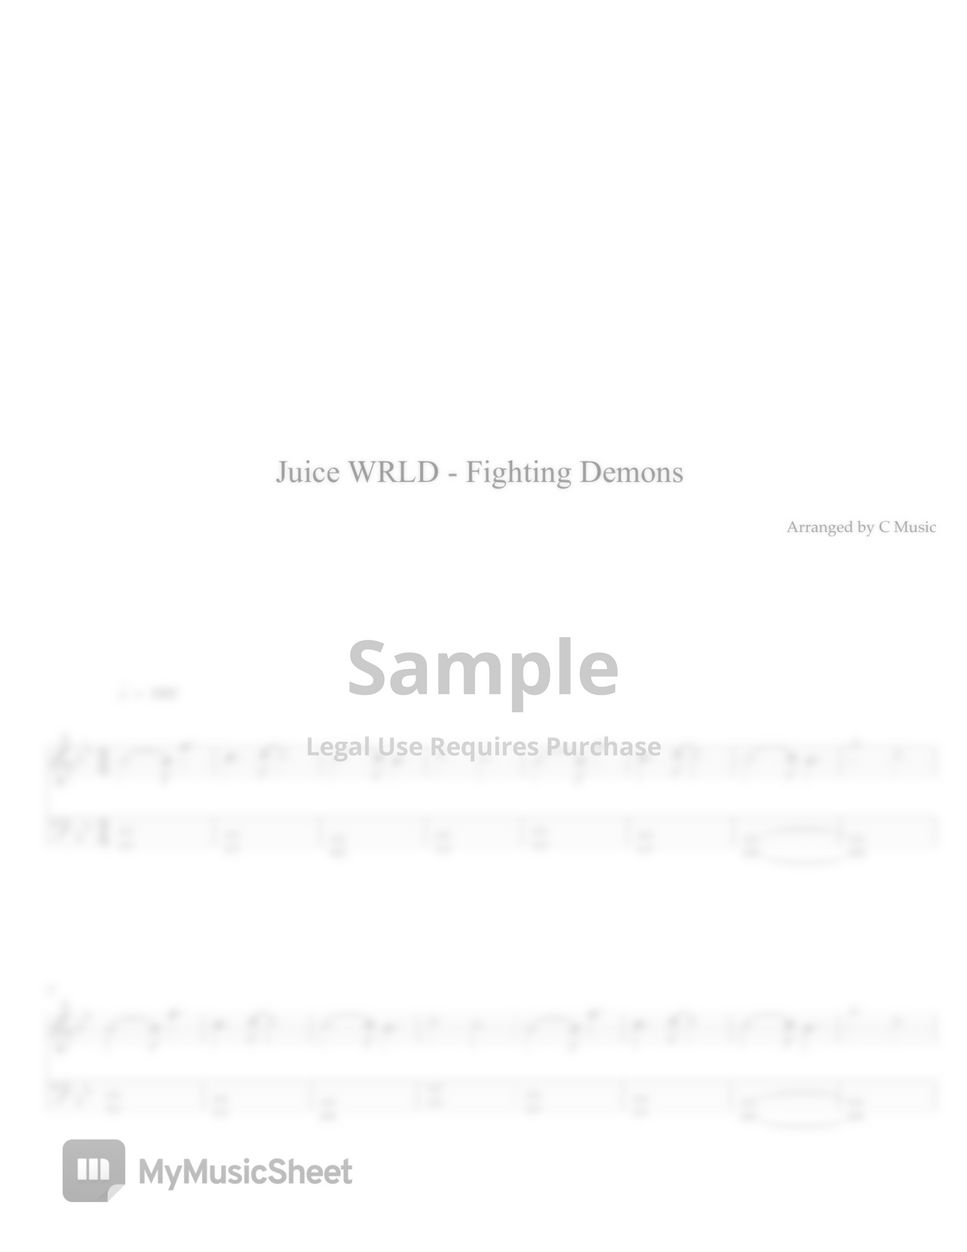 Juice WRLD - Fighting Demons by C Music